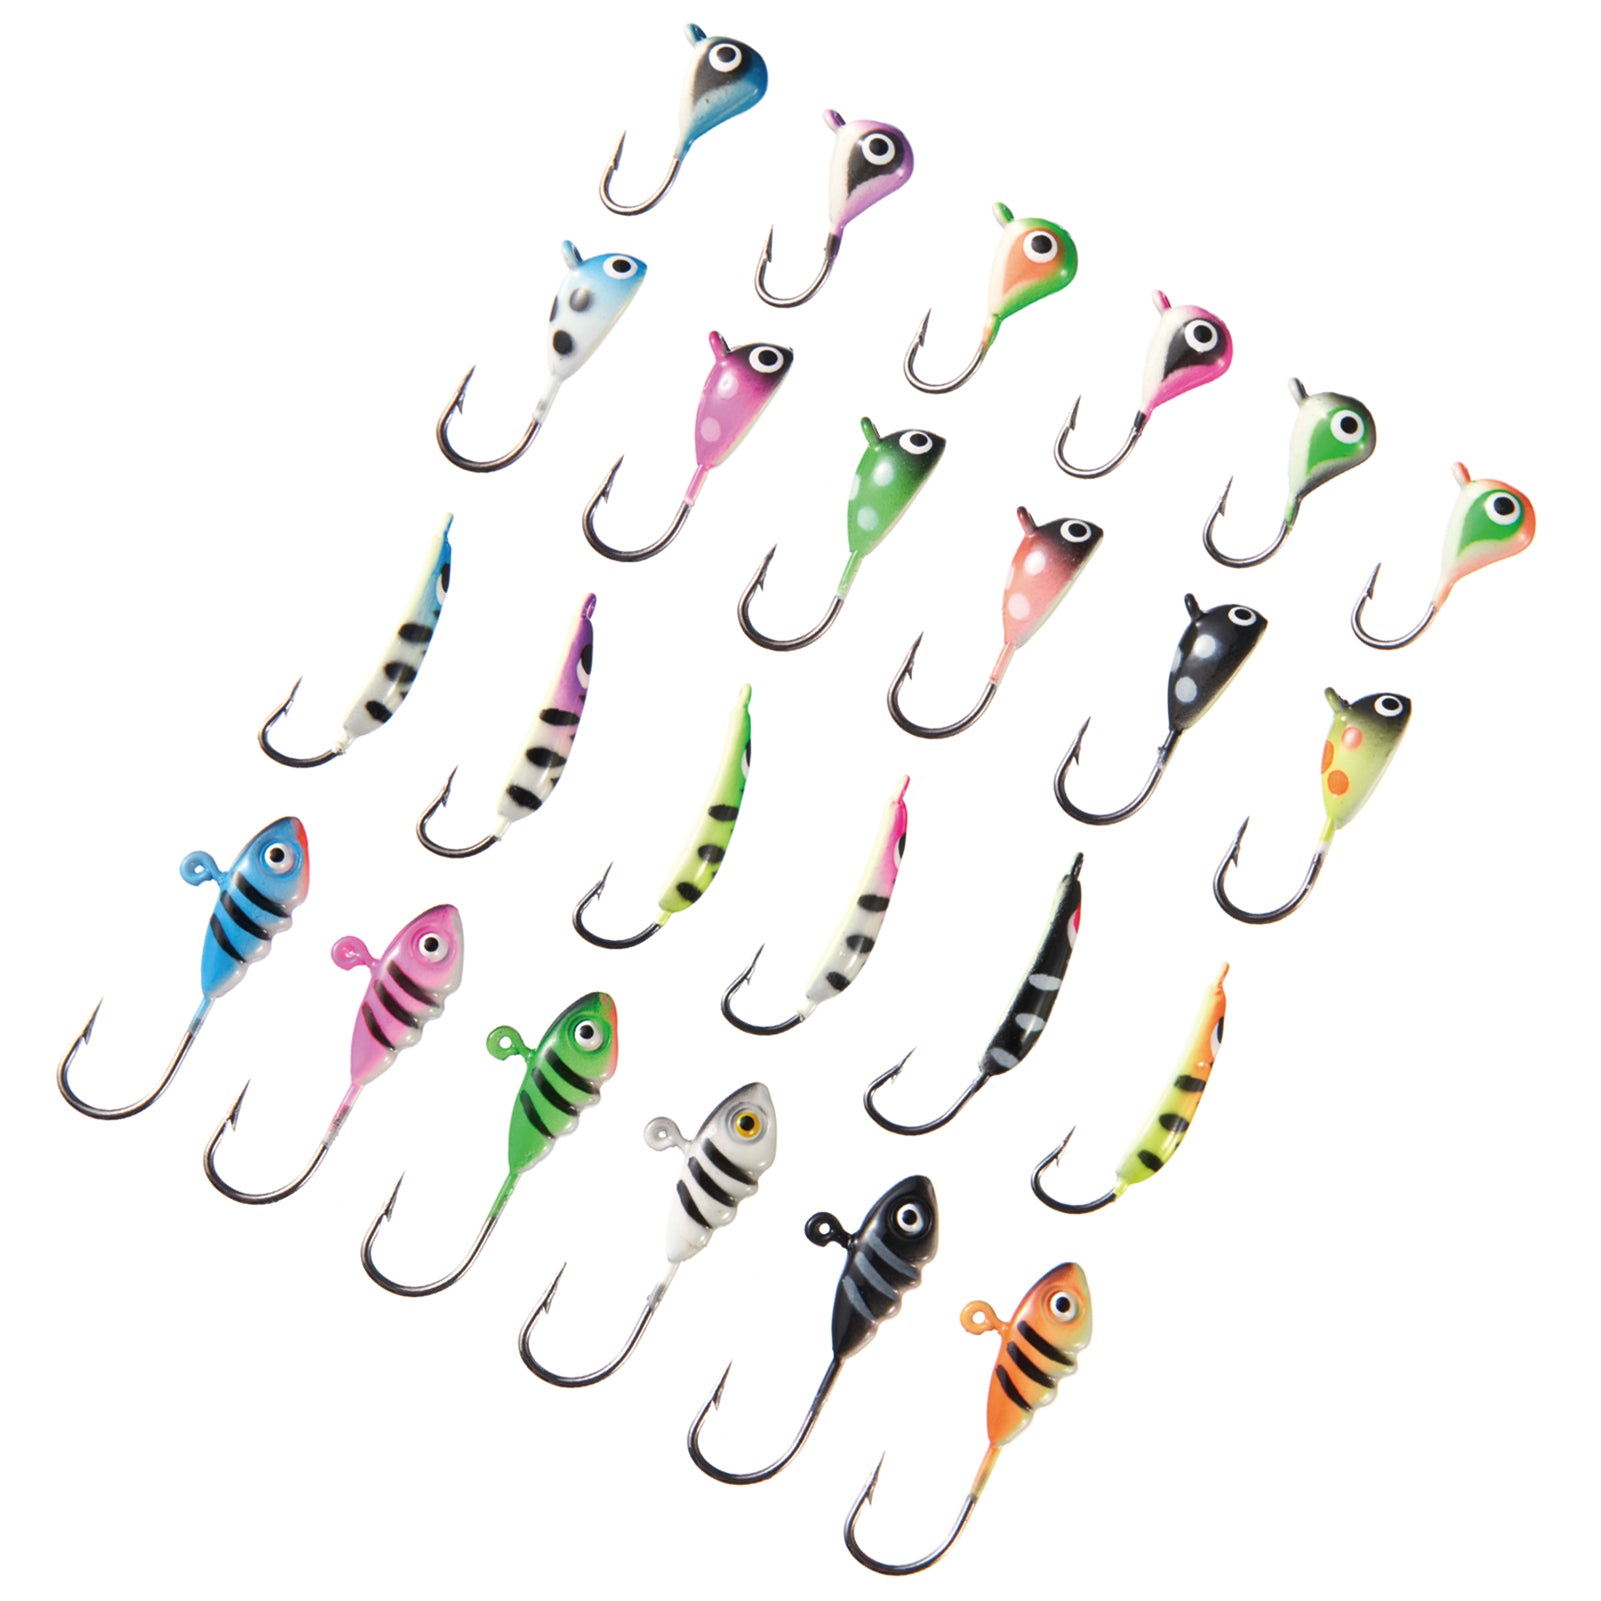 Ice Fishing Lure Kit Glowing Paint Jigs, 24pcs assorted  crappie/panfish/perch jigs - BI03